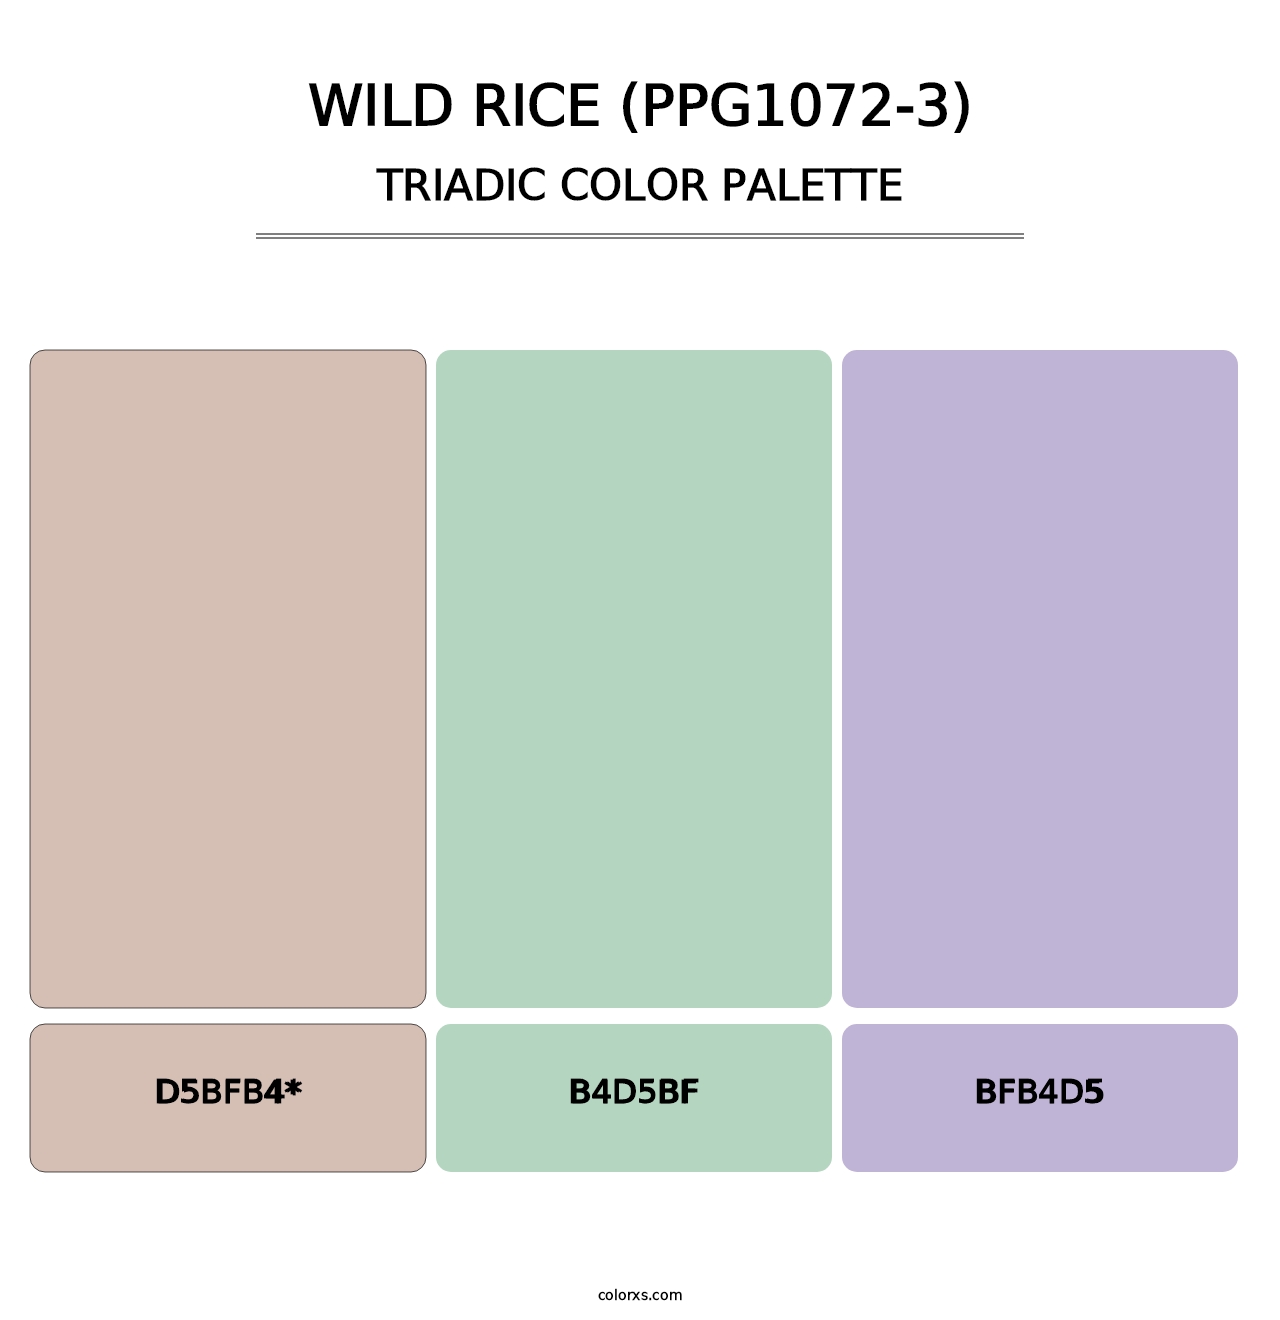 Wild Rice (PPG1072-3) - Triadic Color Palette